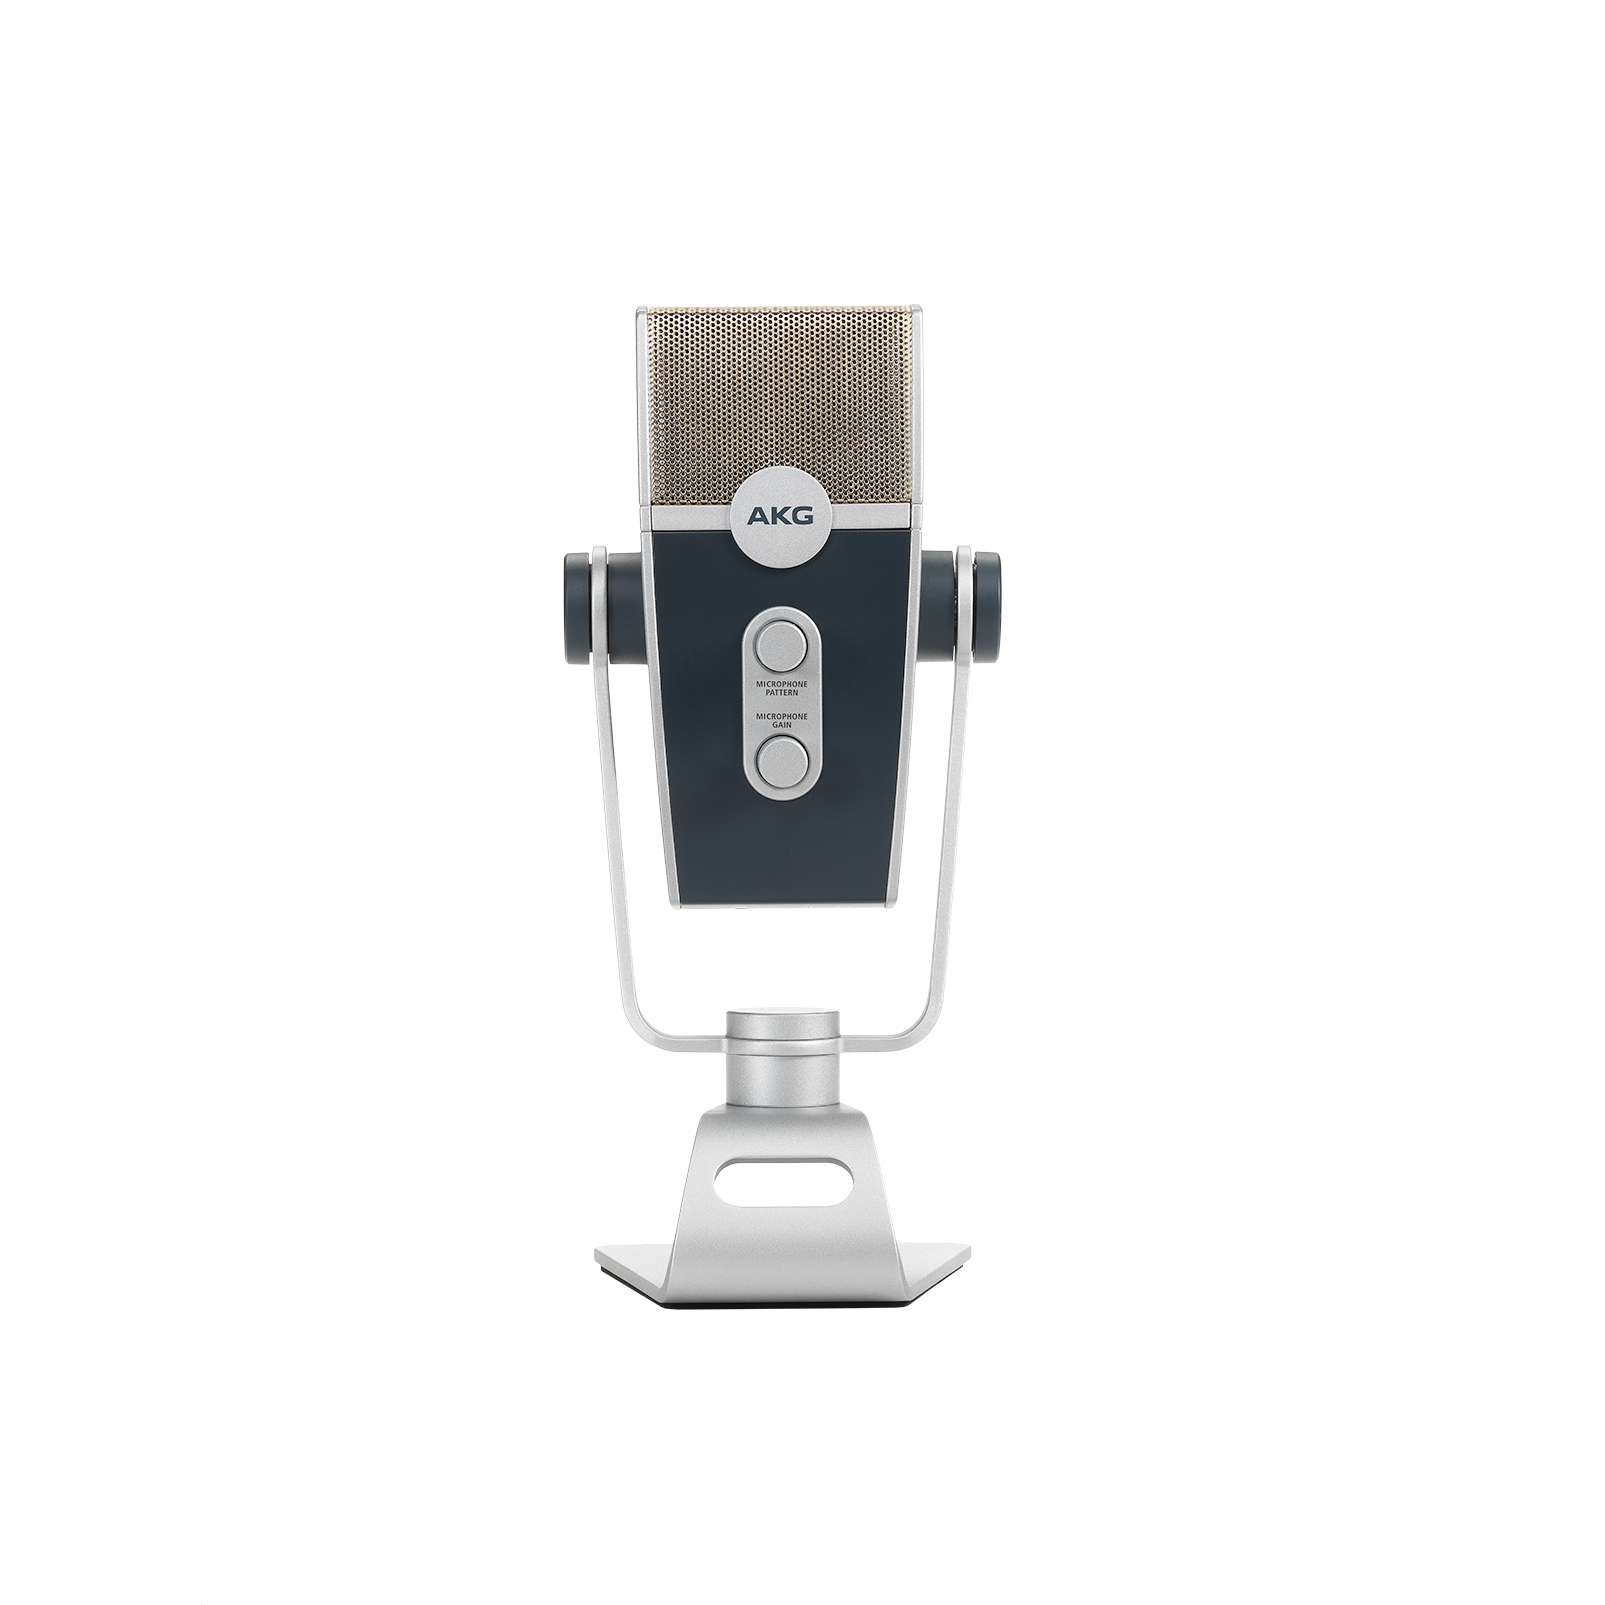 AKG Lyra (B-Stock) - Silver - Ultra-HD Multimode USB Microphone  - Back